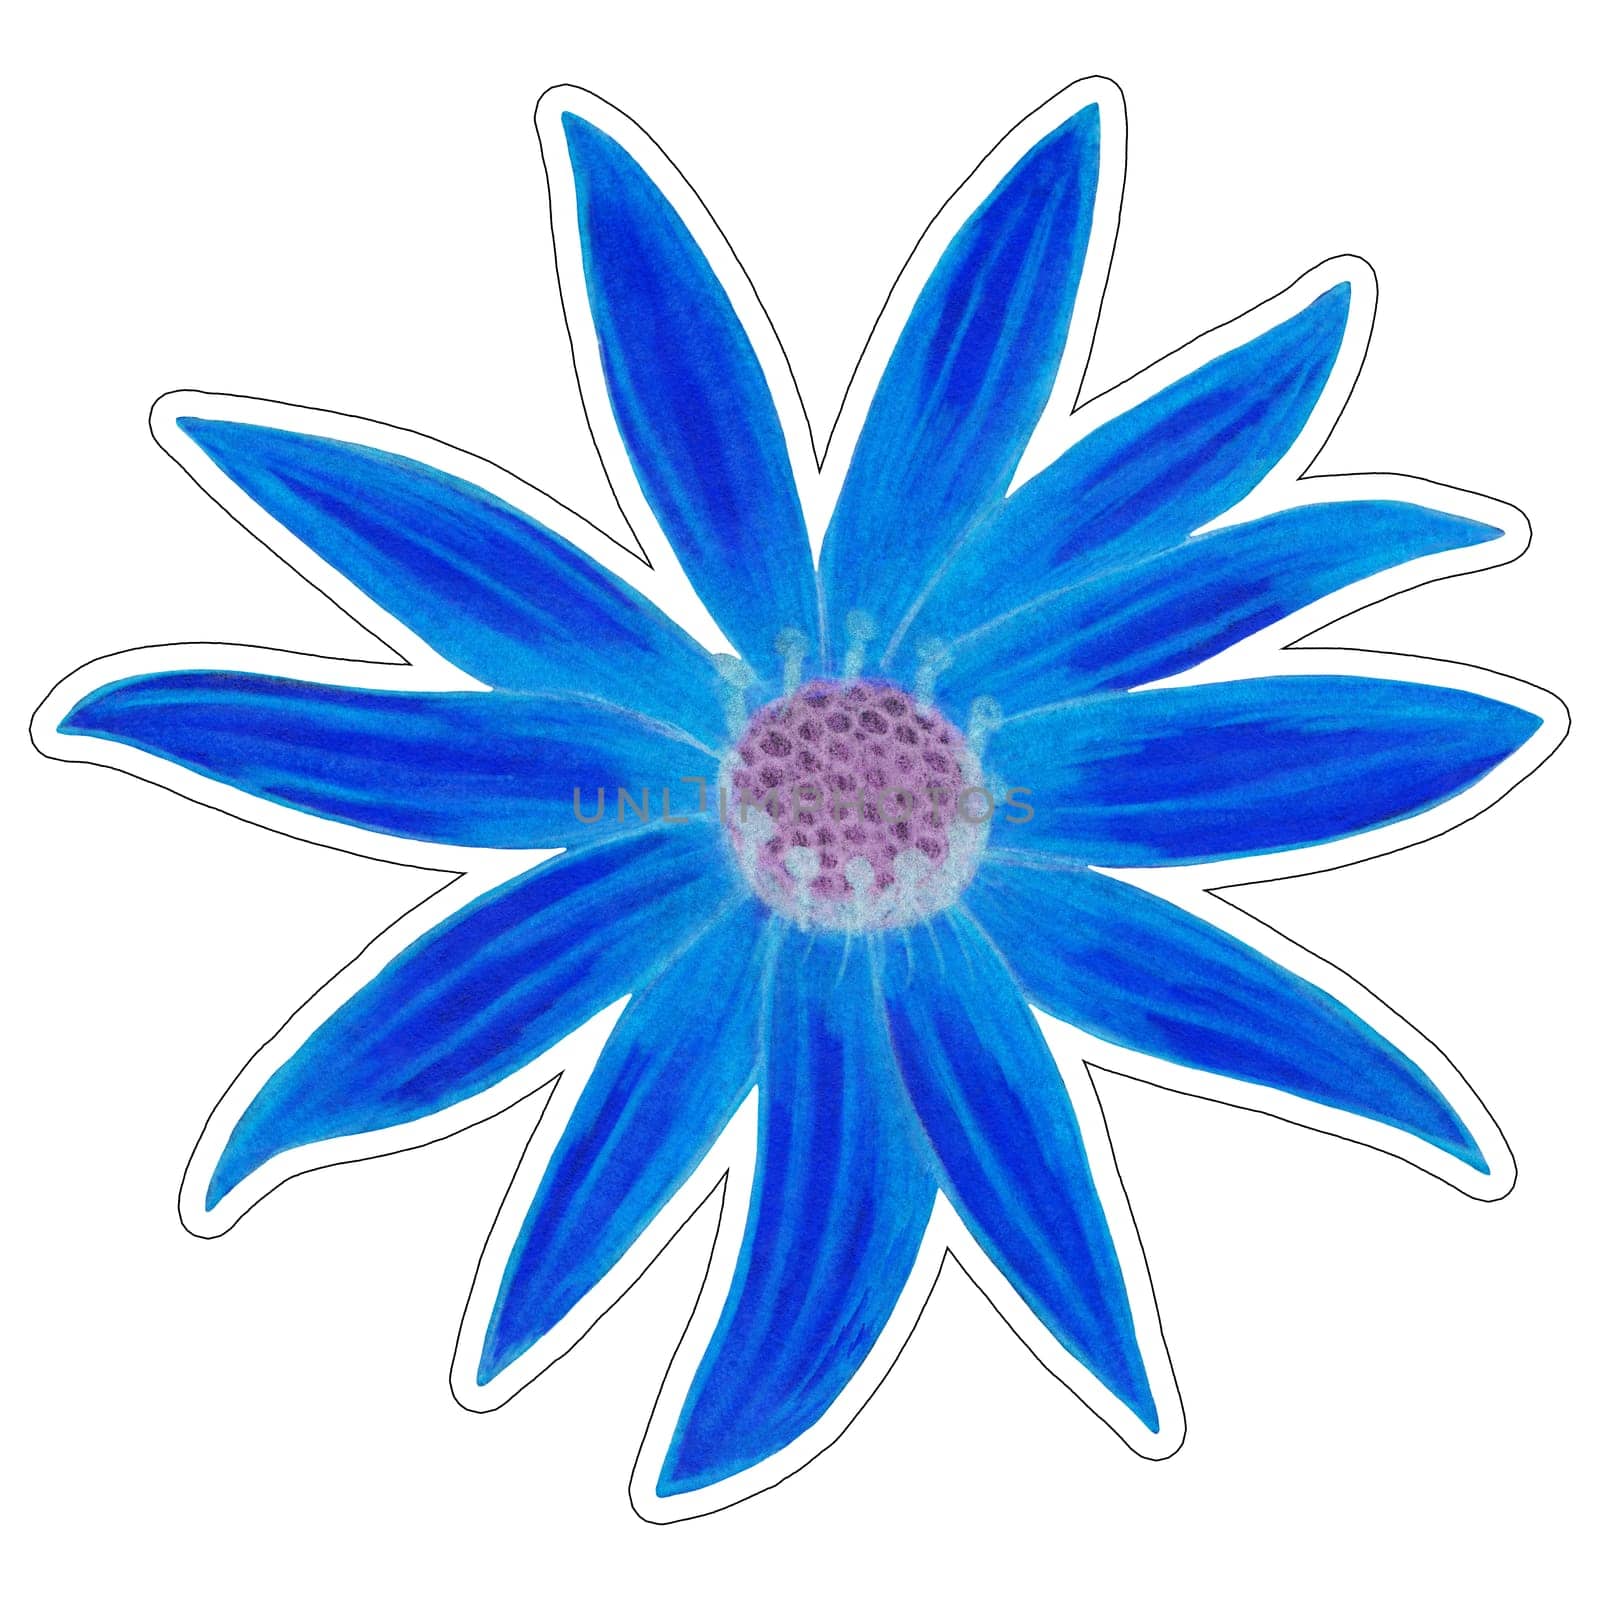 Sticker of Blue Topinambur Isolated on White Background. Jerusalem Artichoke Flower Element Sticker Drawn by Colored Pencil.